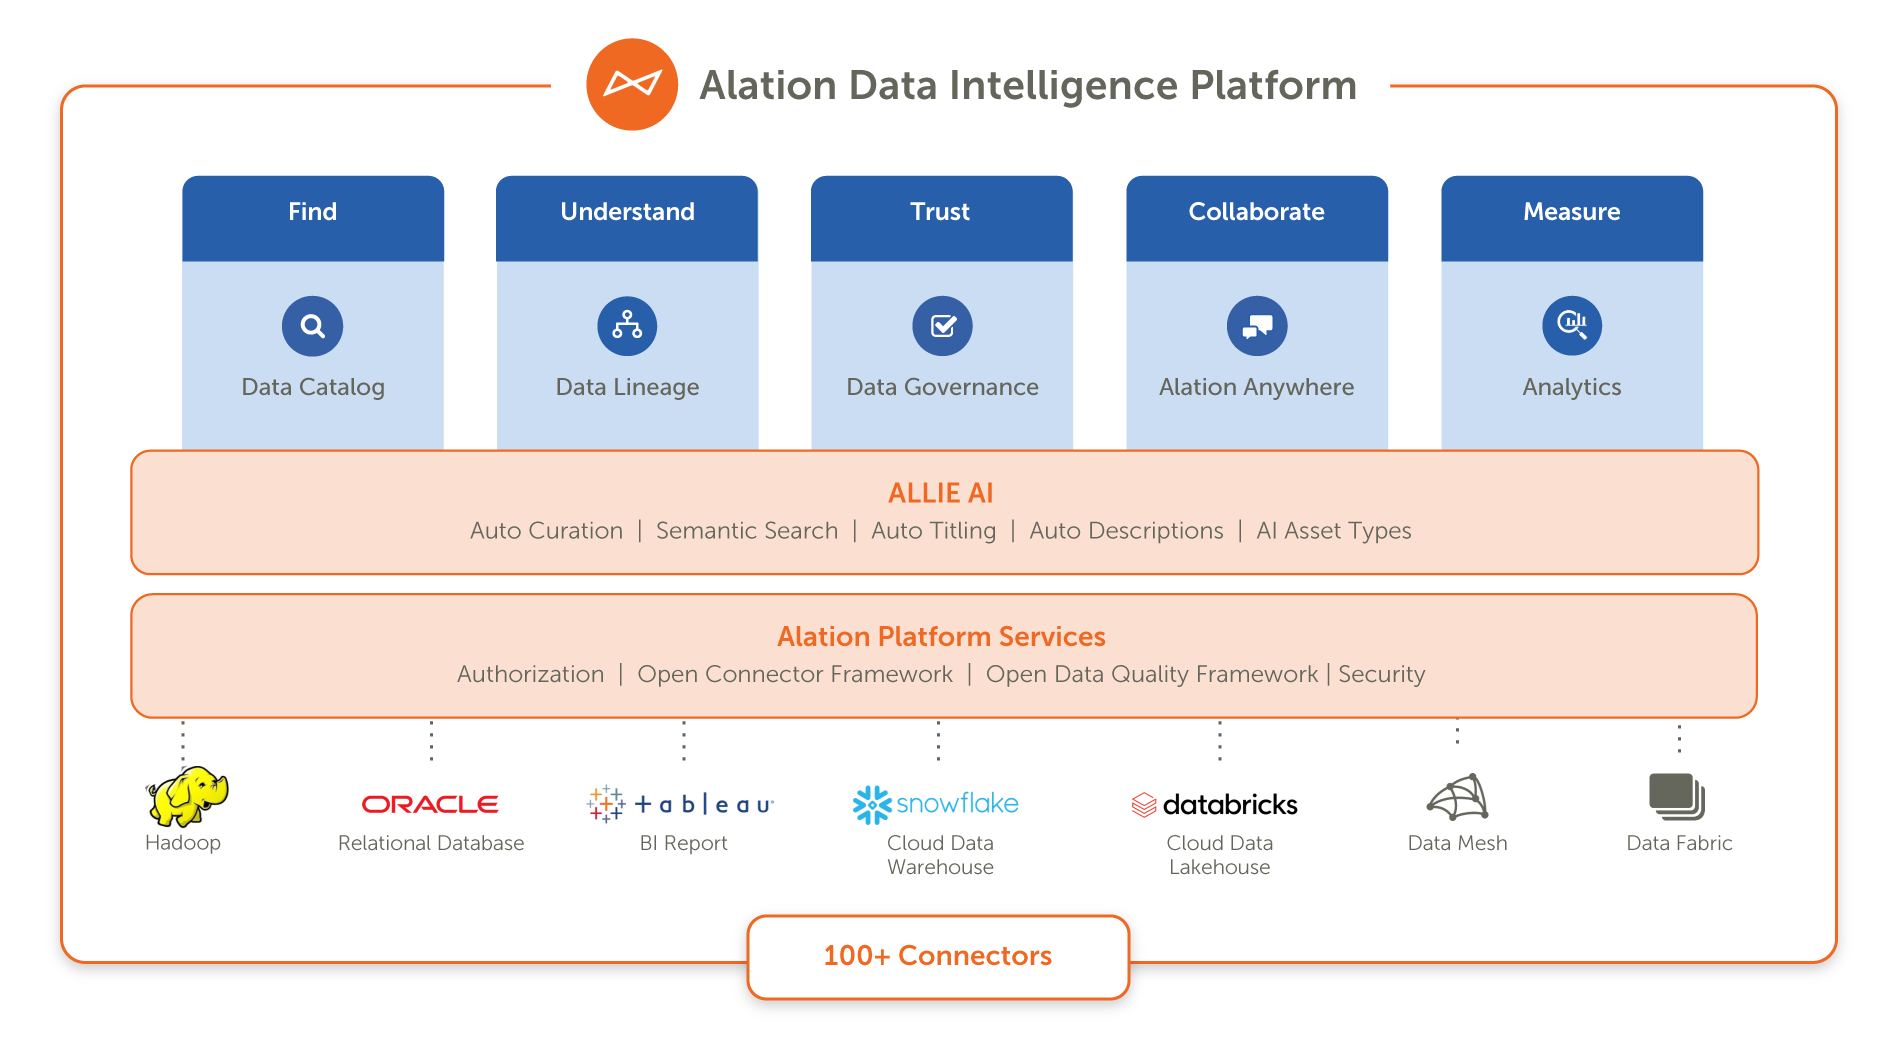 Visualization of the Alation Data Intelligence Platform